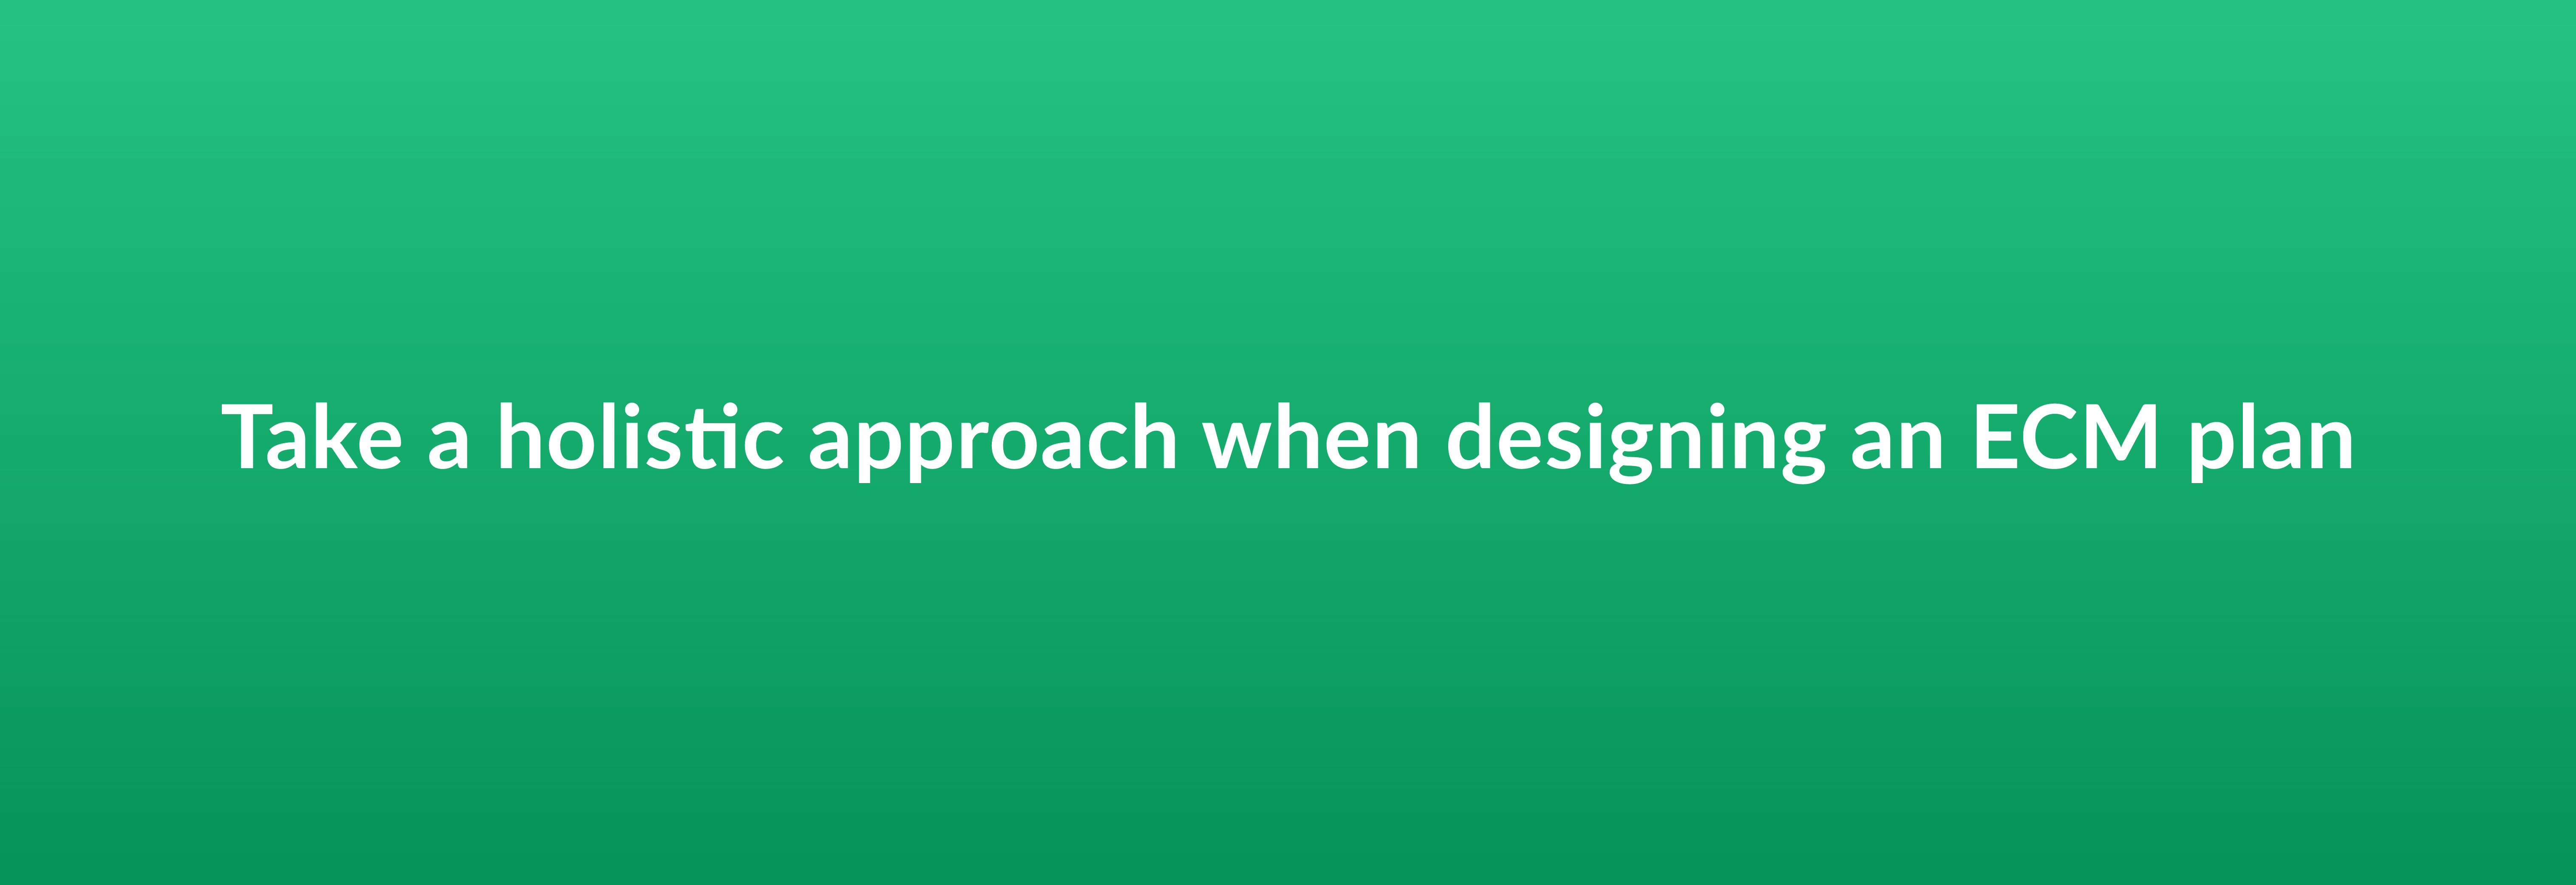 Take a holistic approach when designing an ECM plan